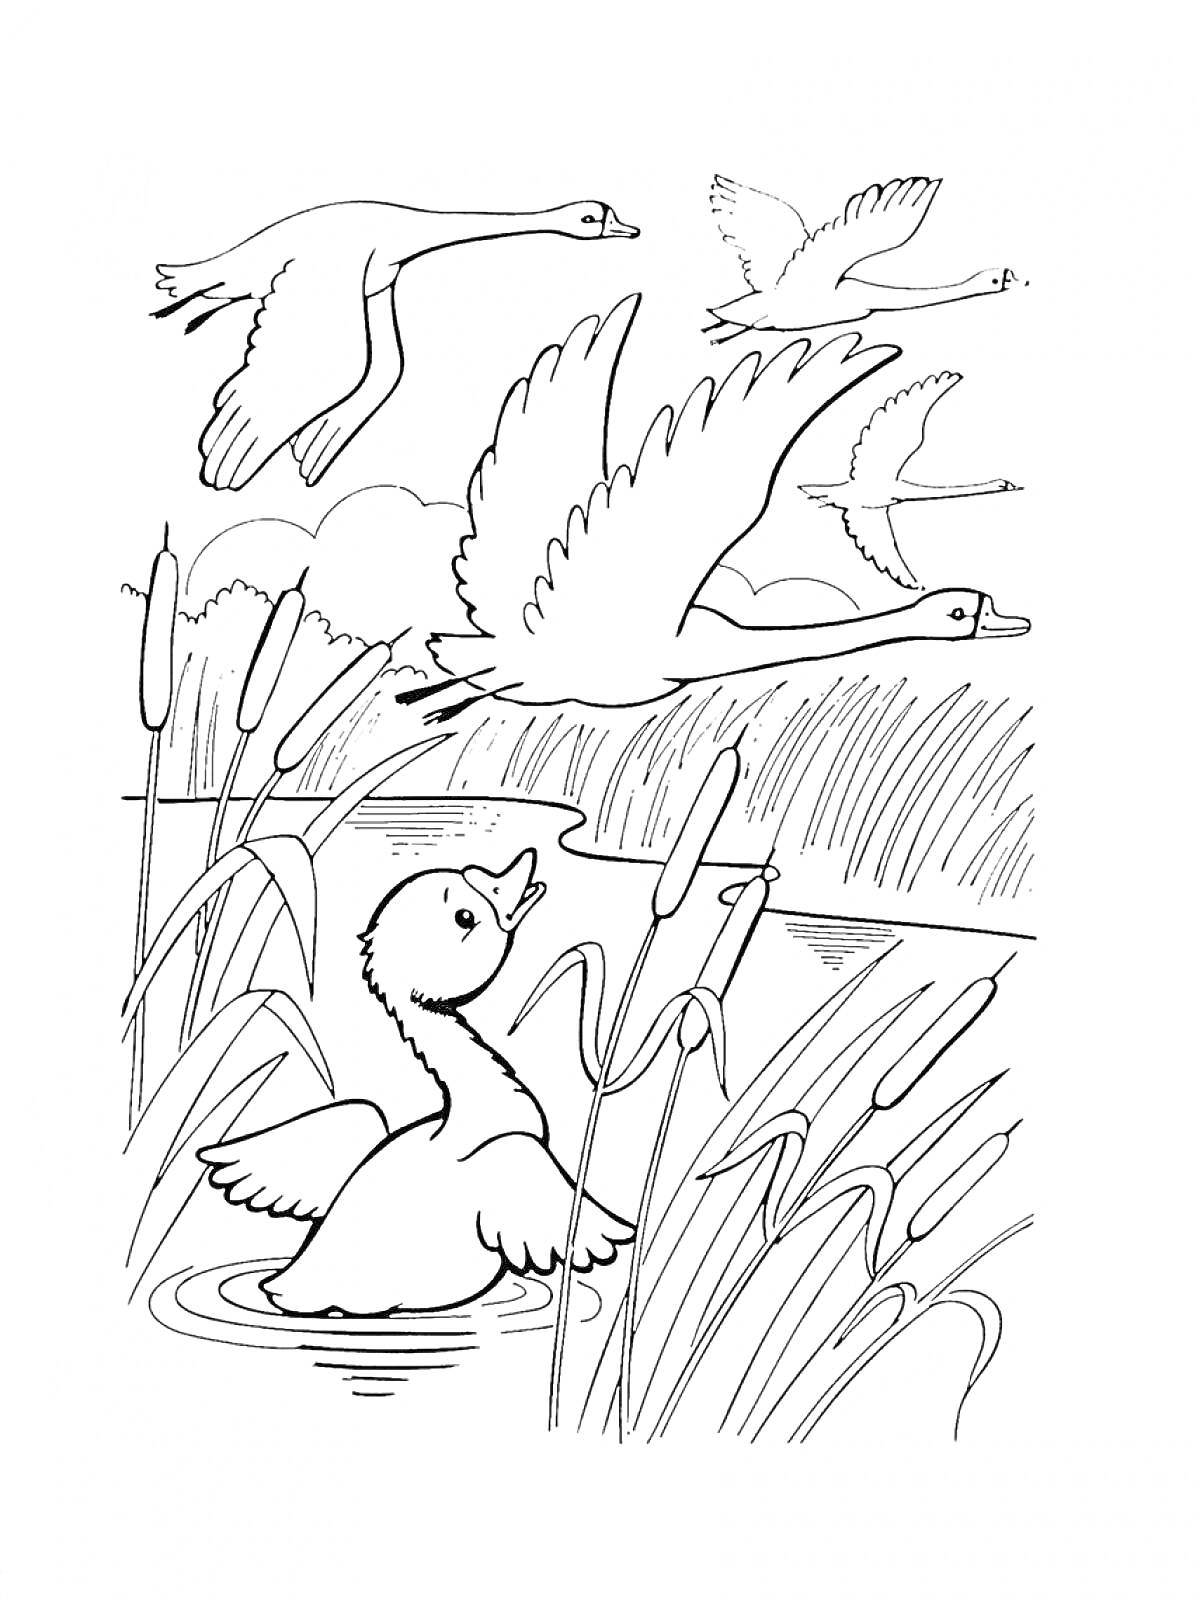 Лебедь на пруду с летящими лебедями и камышами